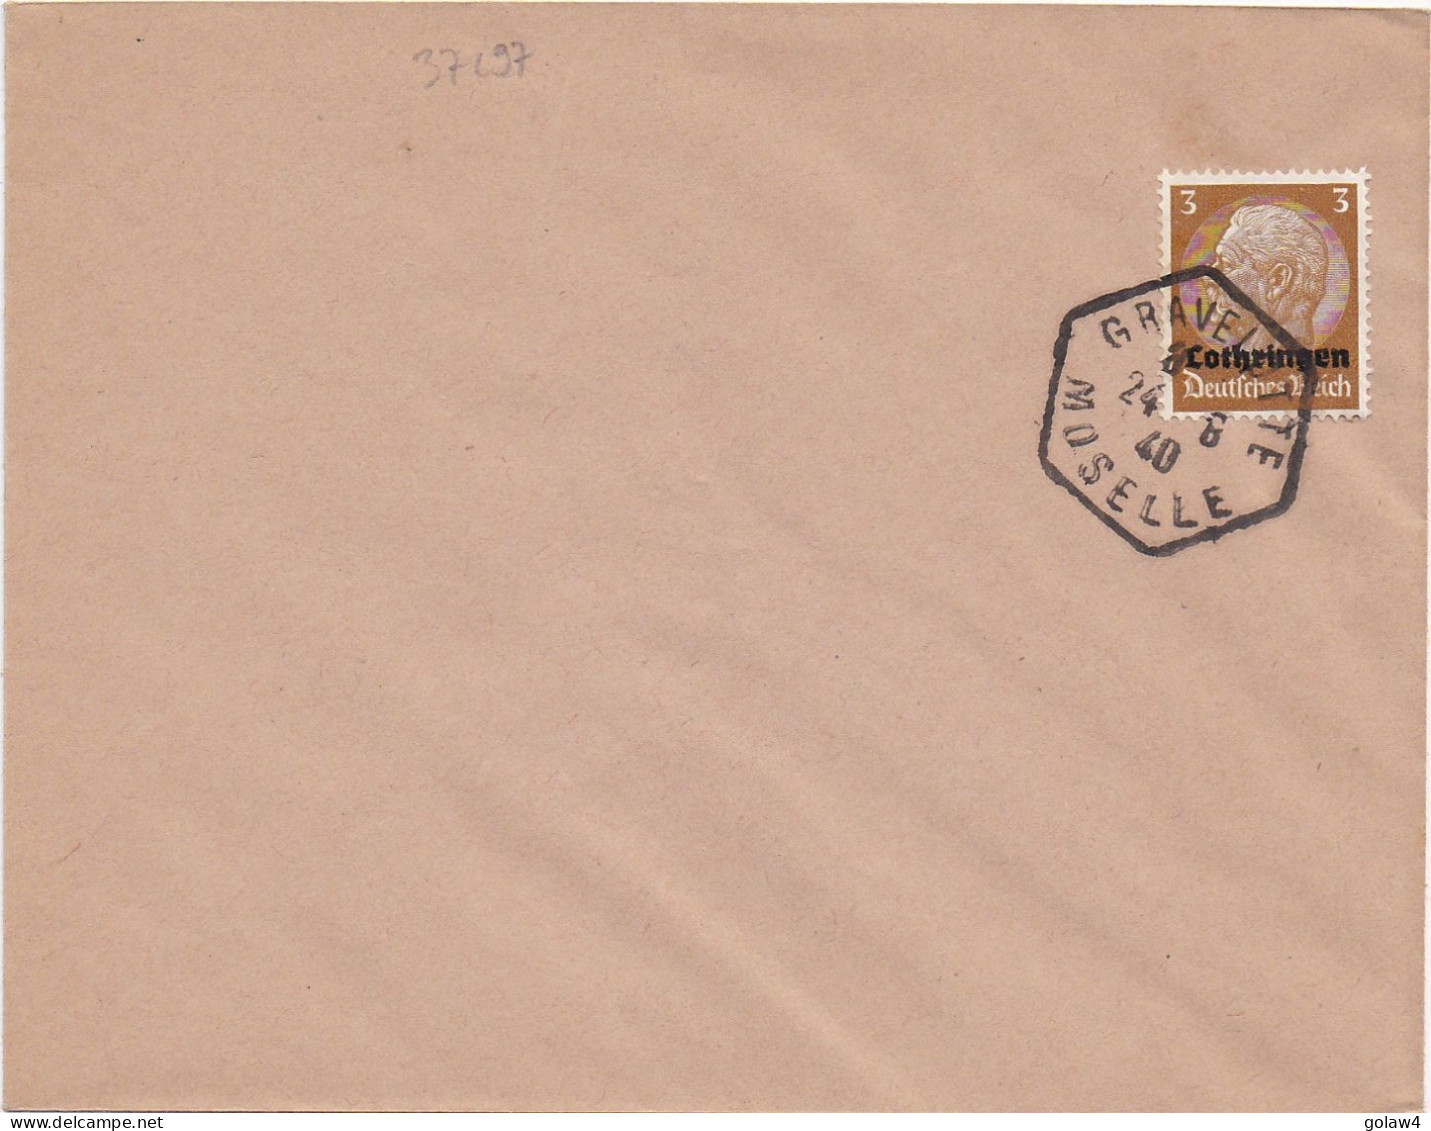 37197# HINDENBURG LOTHRINGEN LETTRE Obl GRAVELOTTE MOSELLE 24 Aout 1940 - Covers & Documents